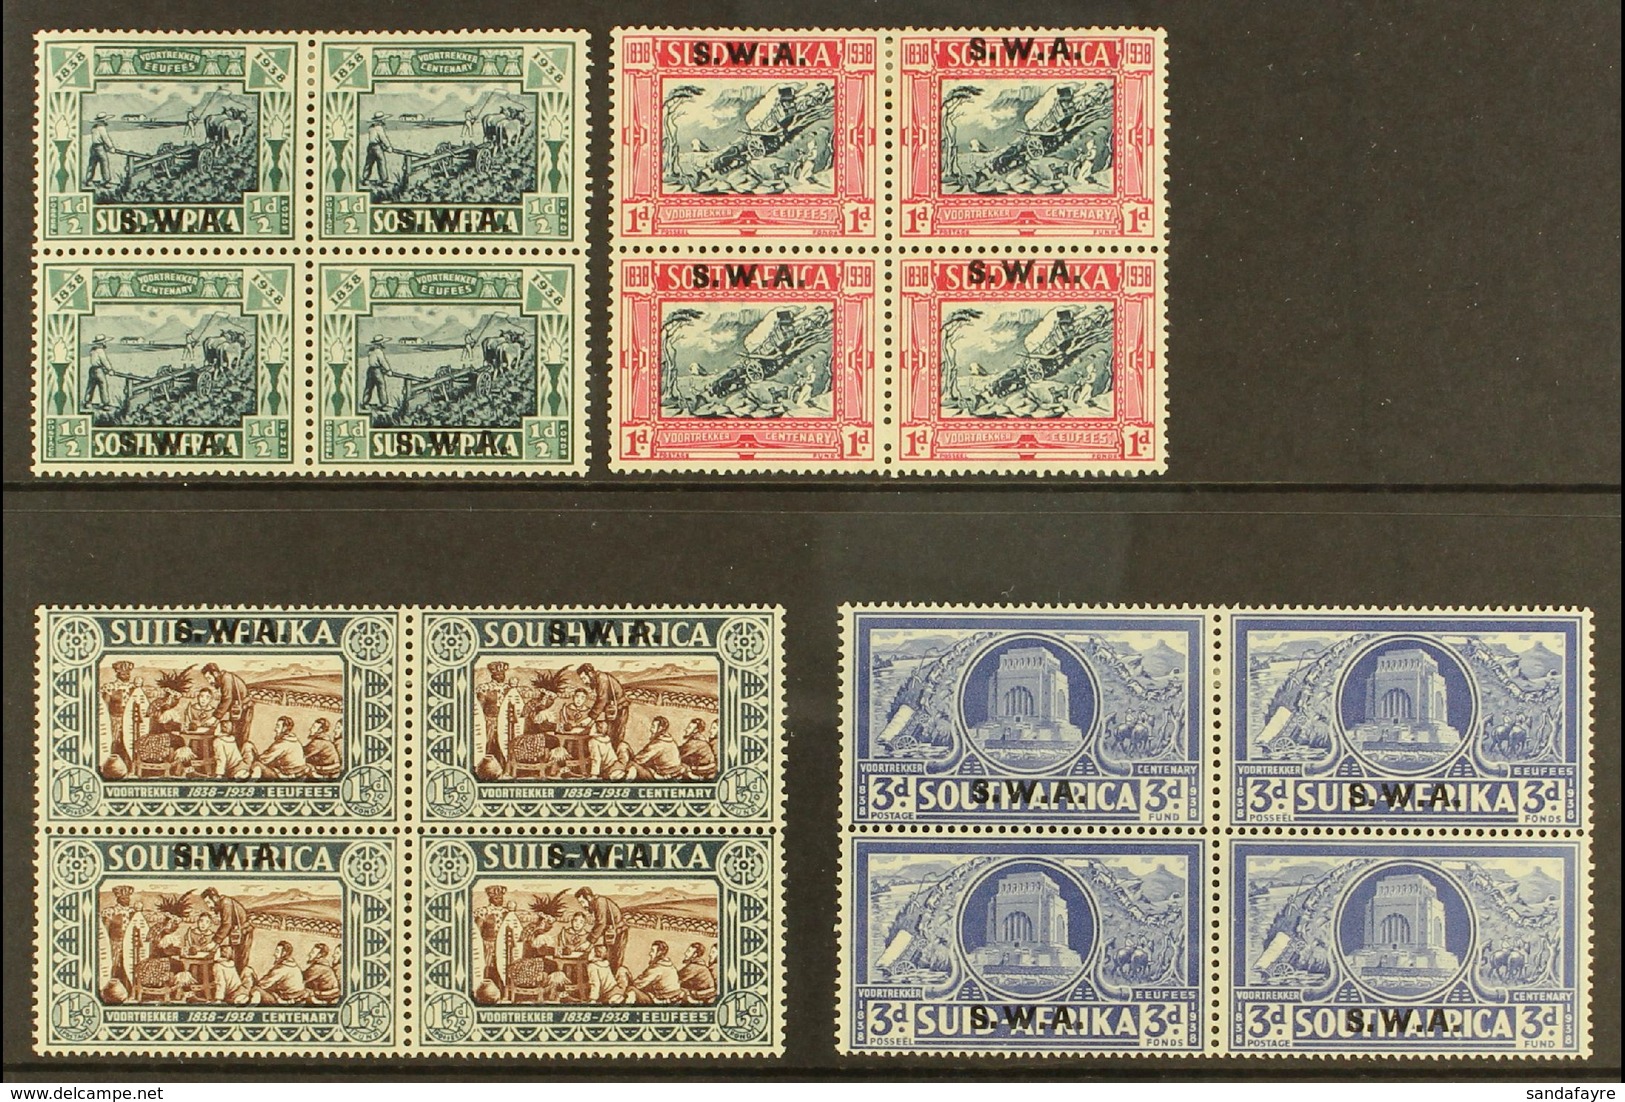 1938 Voortrekker Centenary Memorial Set, SG 105/108 In Fine Mint/NHM Blocks Of 4, The Lower Stamps In Each Block Being N - África Del Sudoeste (1923-1990)